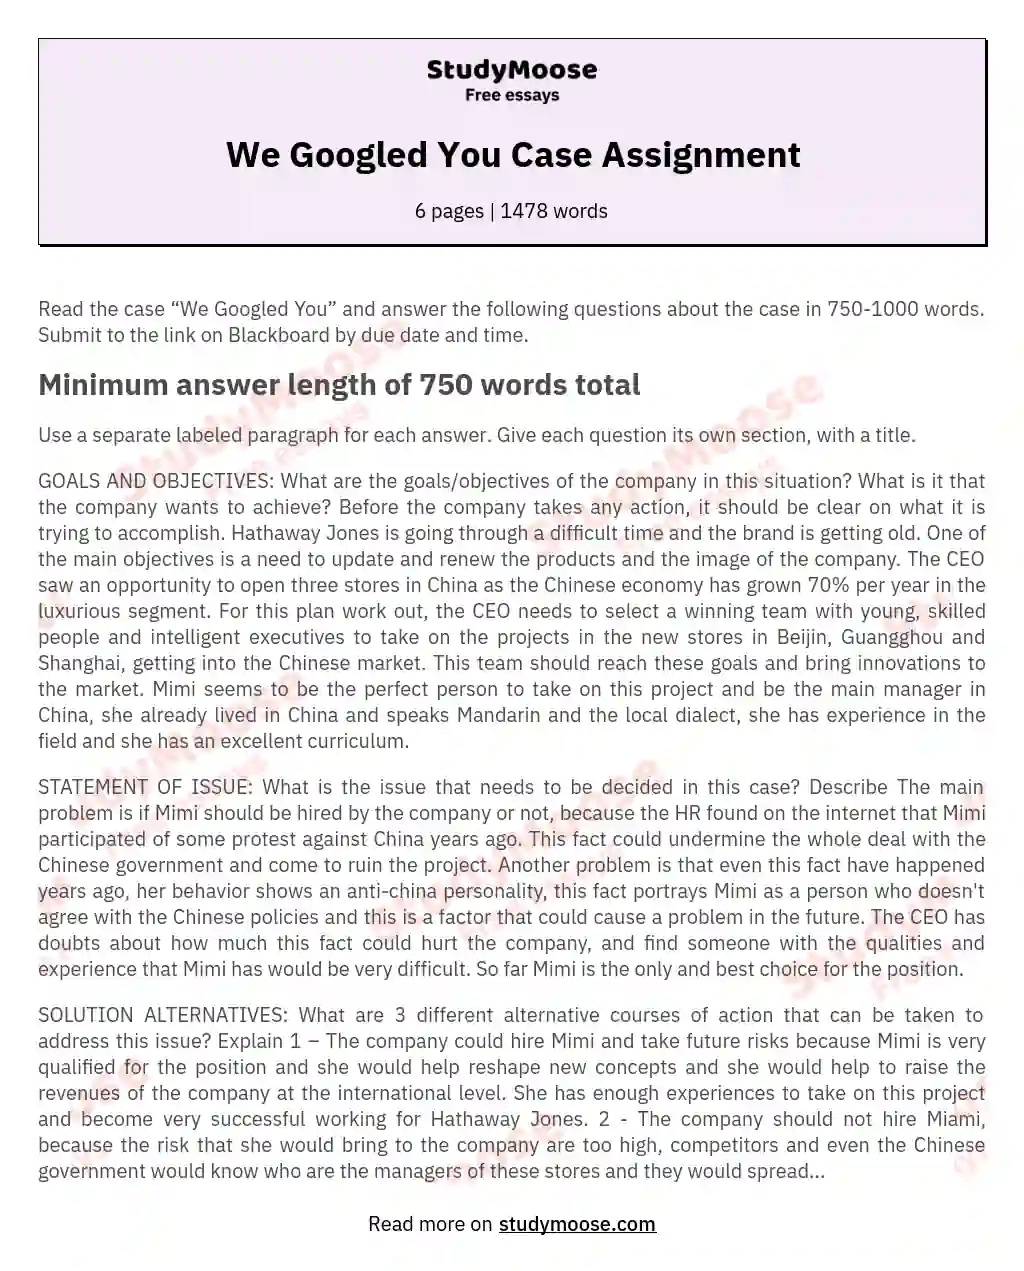 We Googled You Case Assignment essay